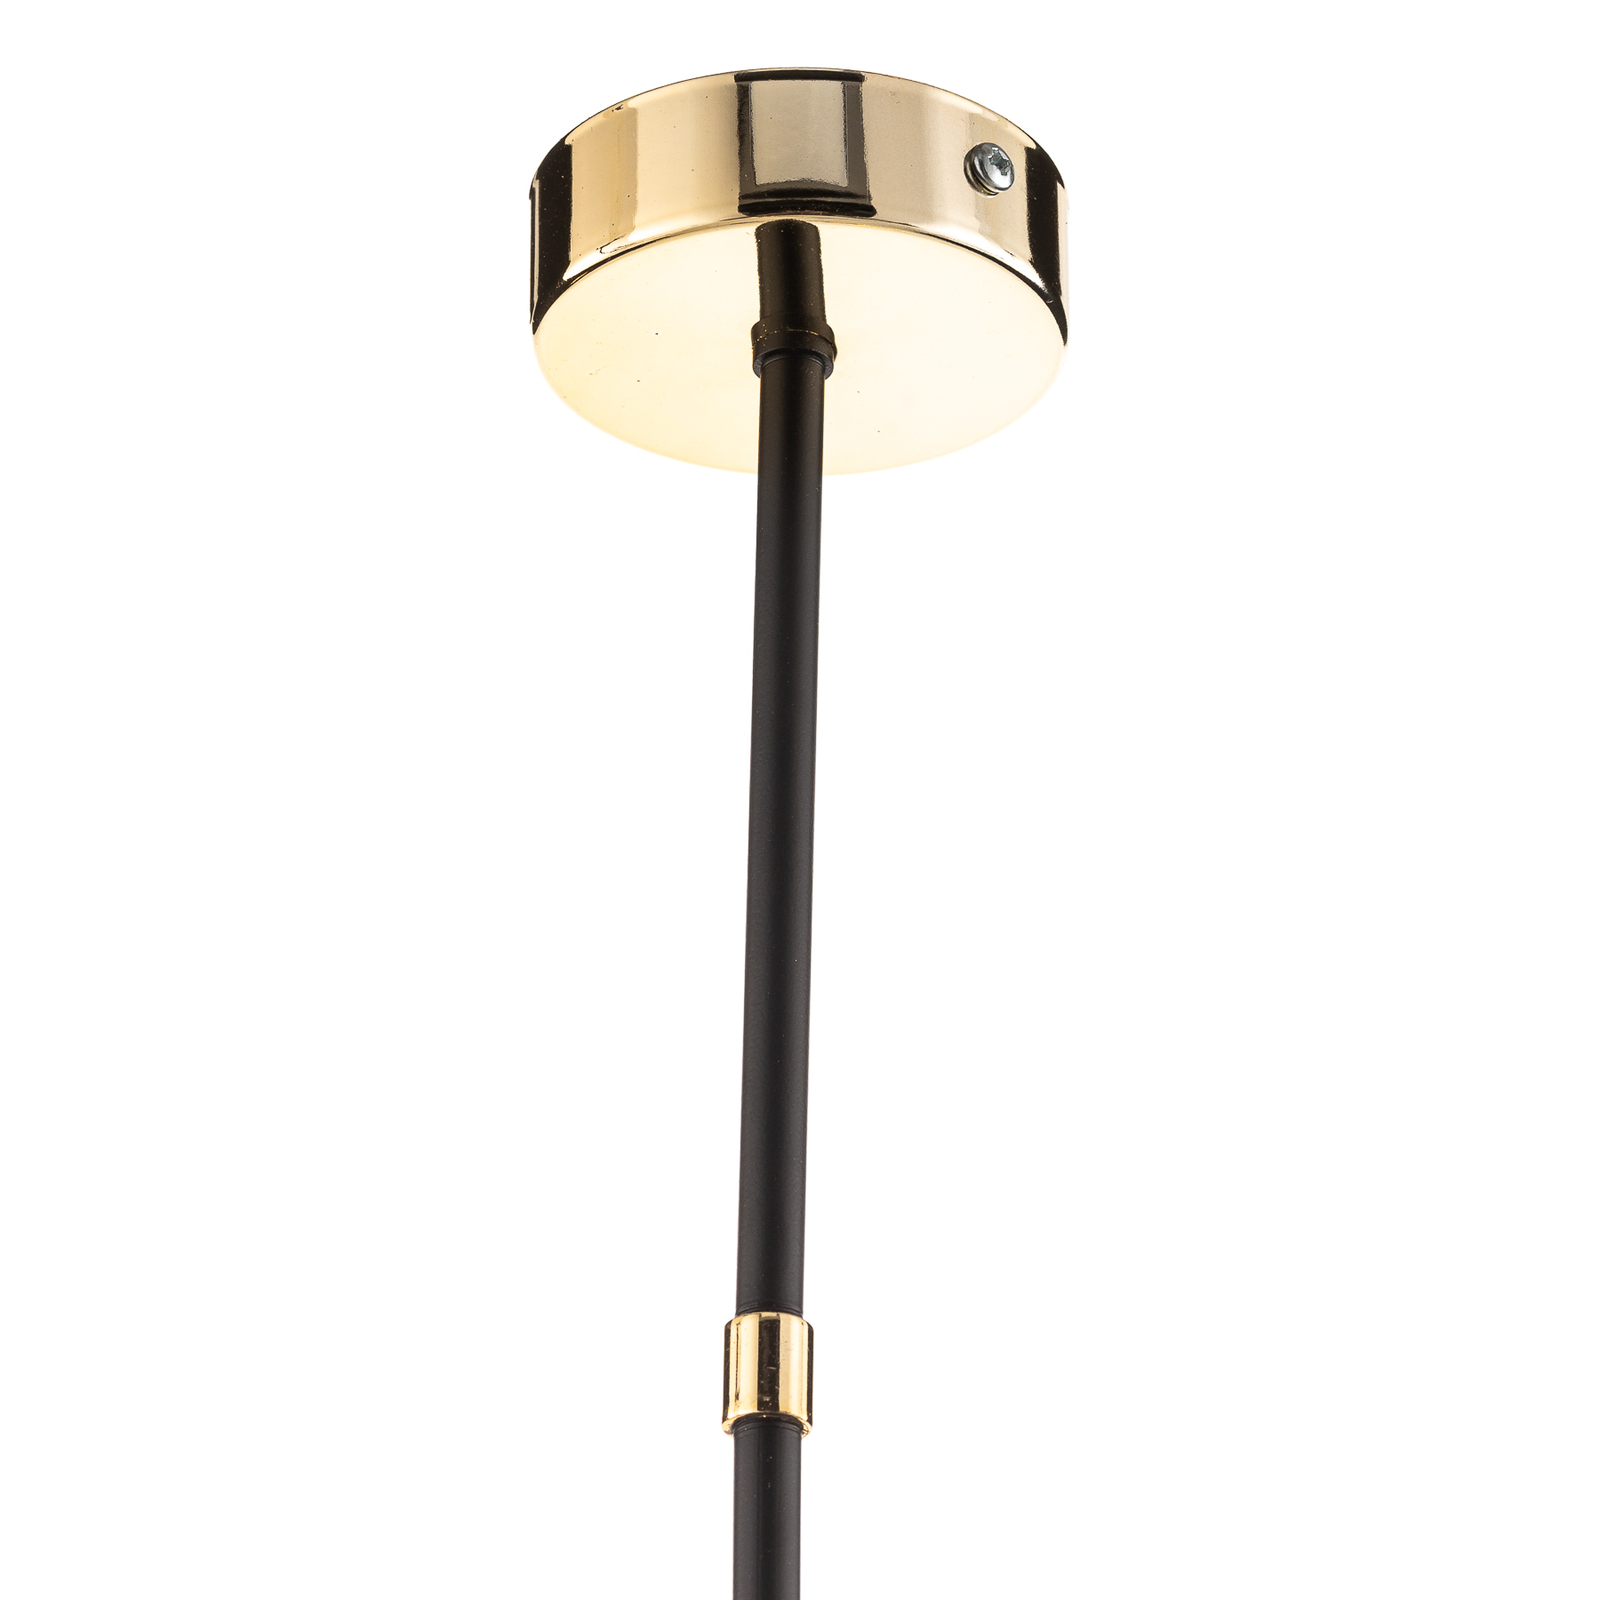 Plafondlamp Juka 6 met gouden fittingen, zwart